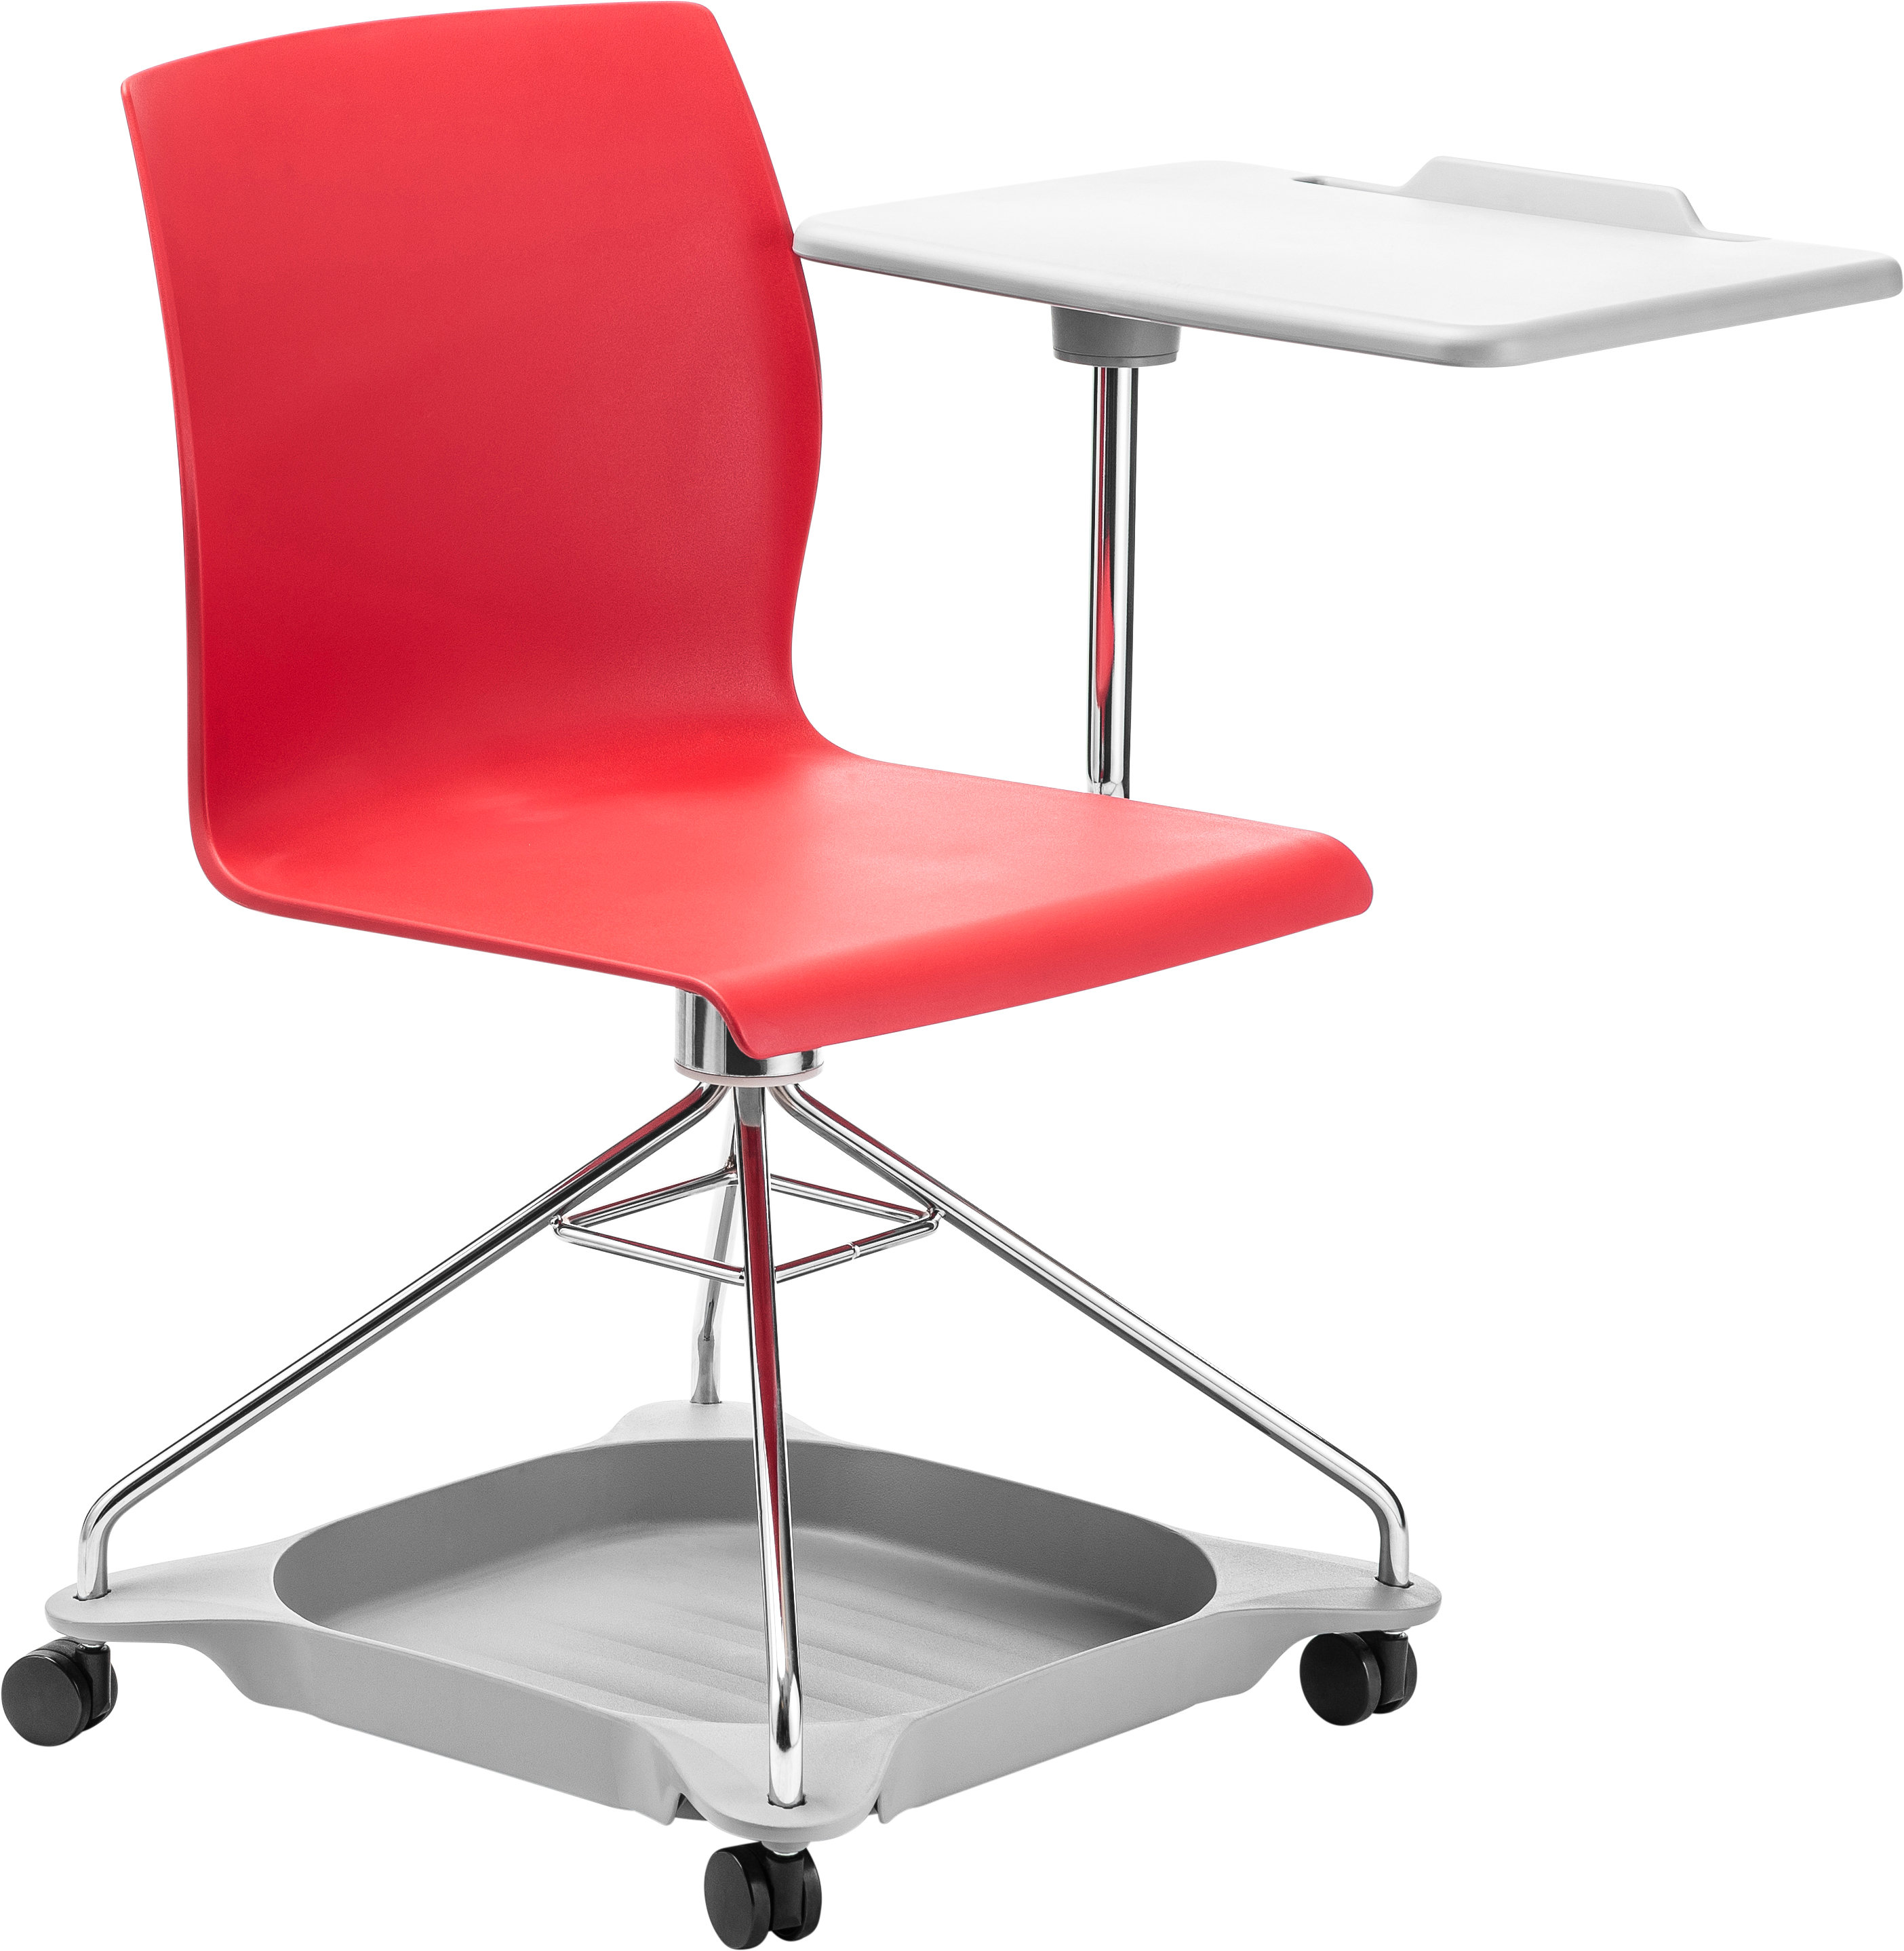 Inspiration Series Combo School Desk - 14 Seat Height Academia